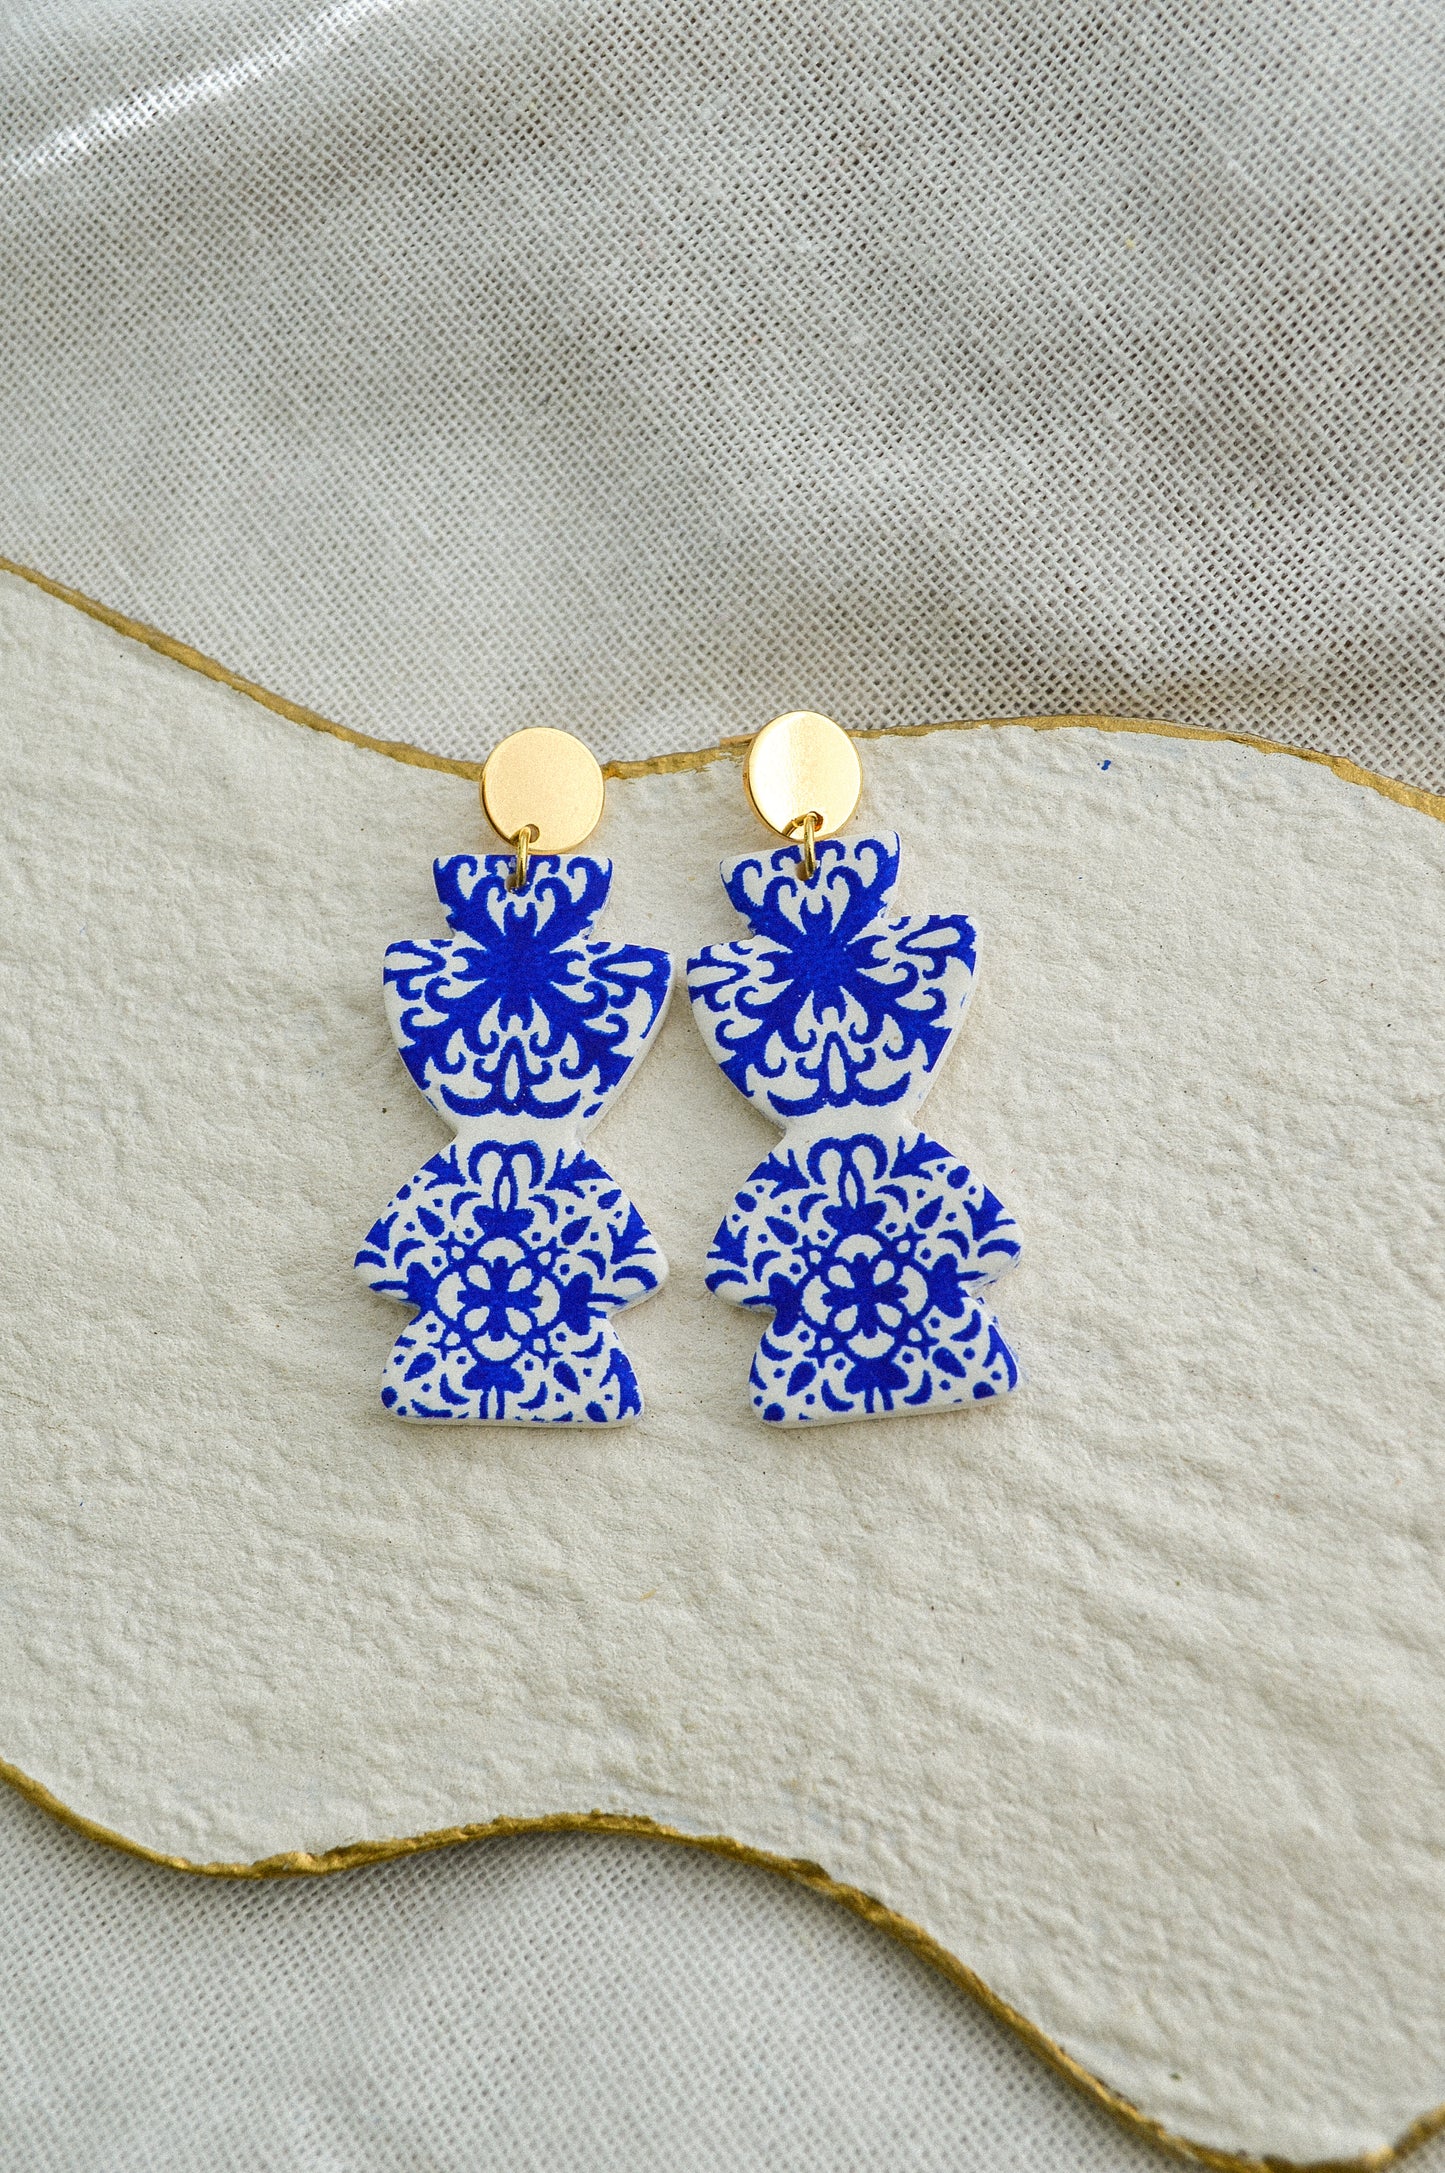 Portuguese tile vase earrings